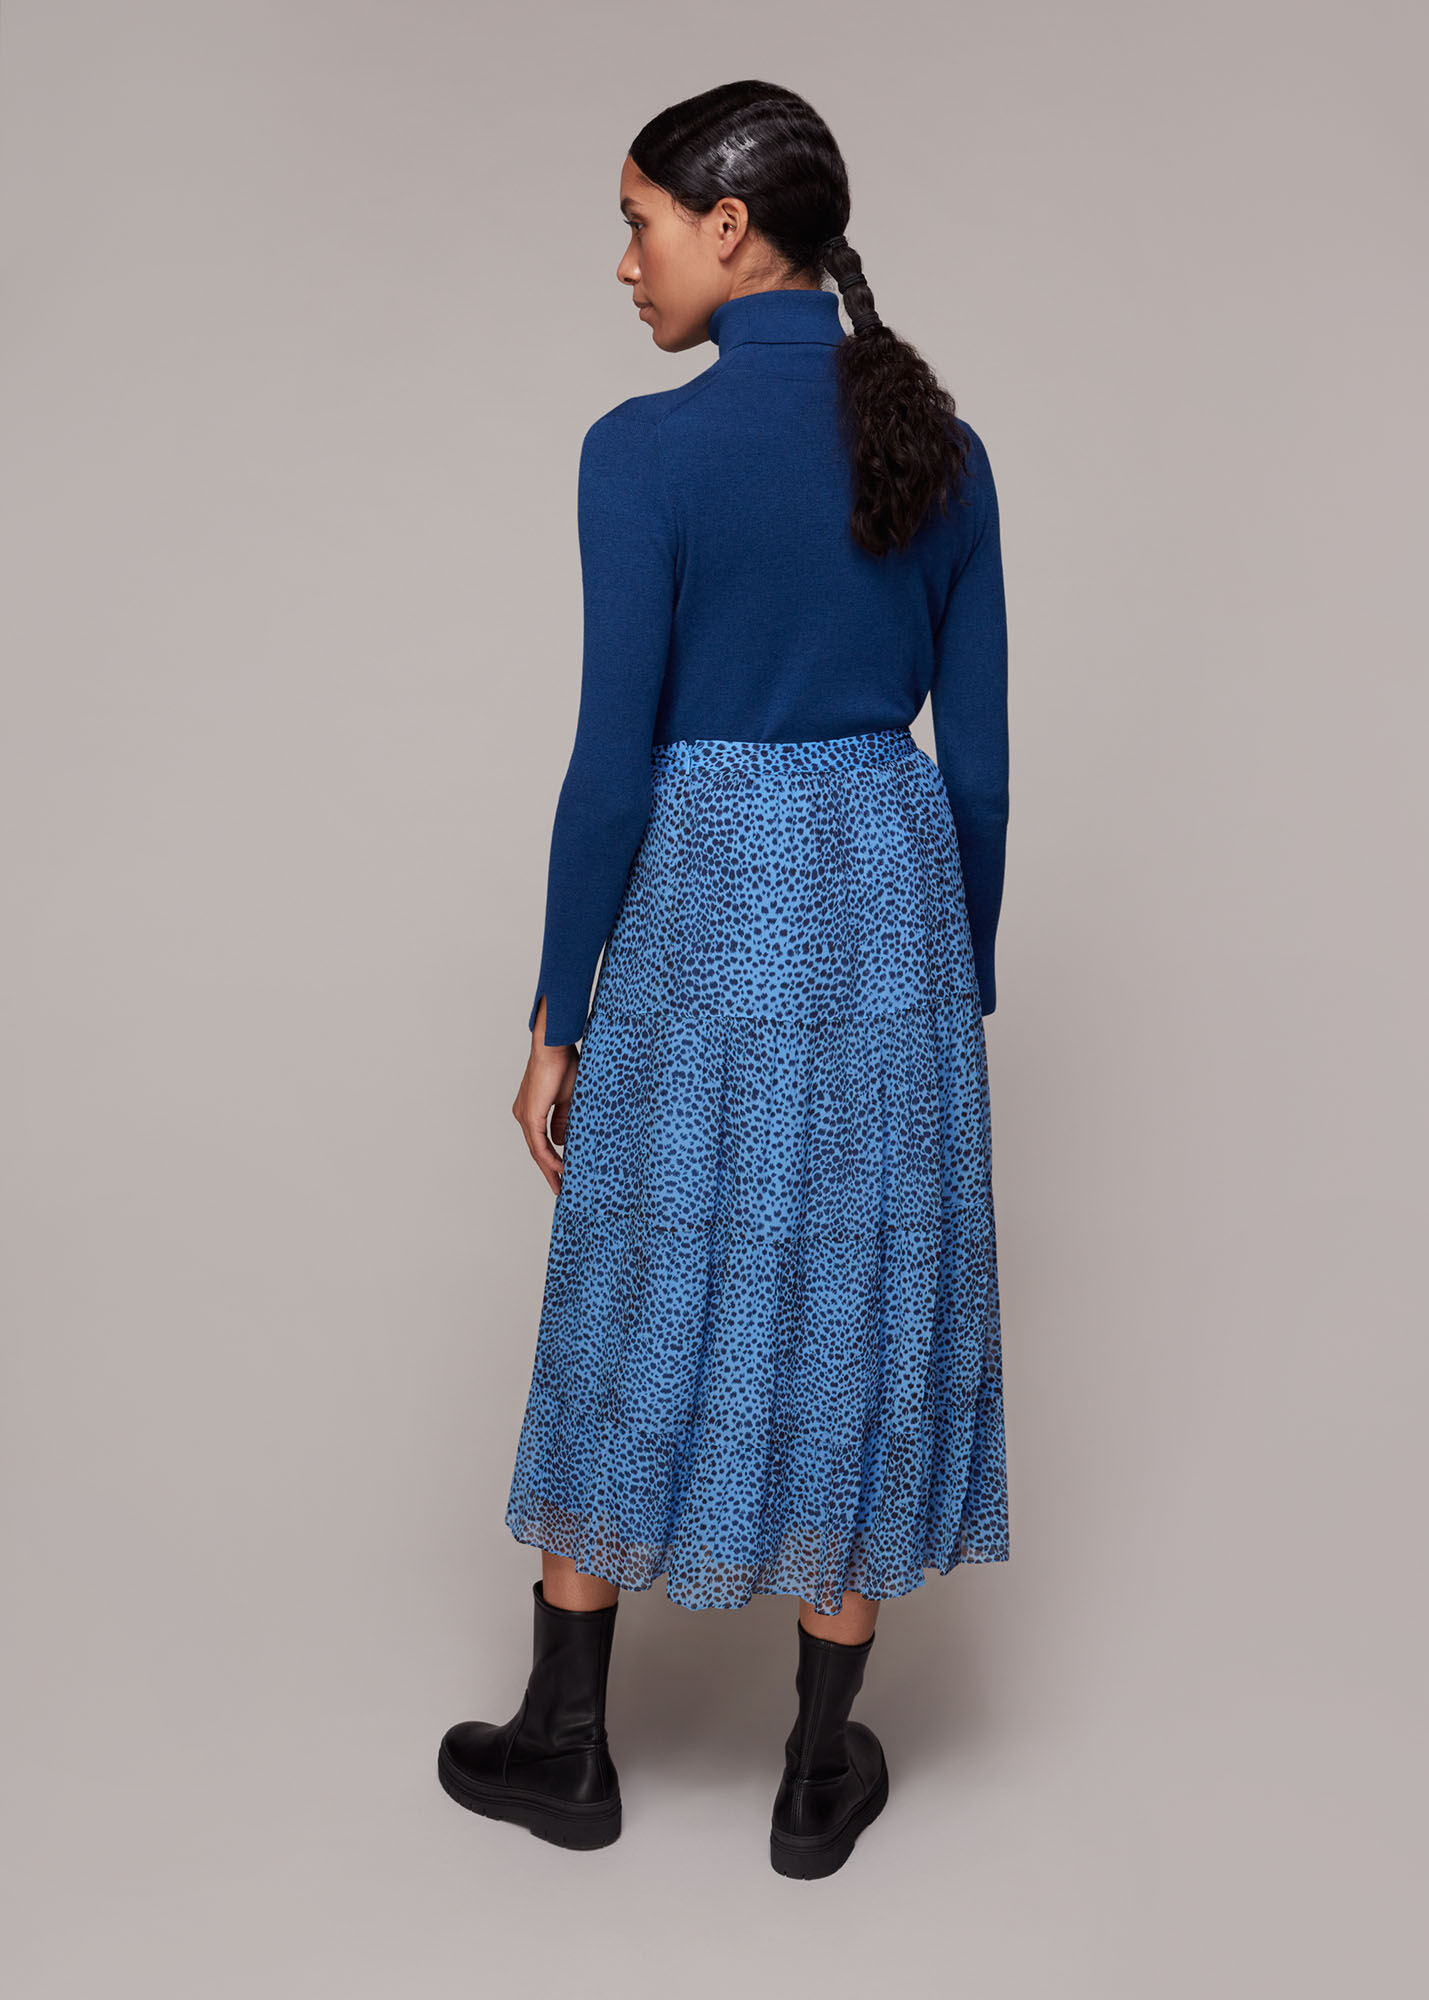 Blue/Multi Sketch Cheetah Print Skirt | WHISTLES